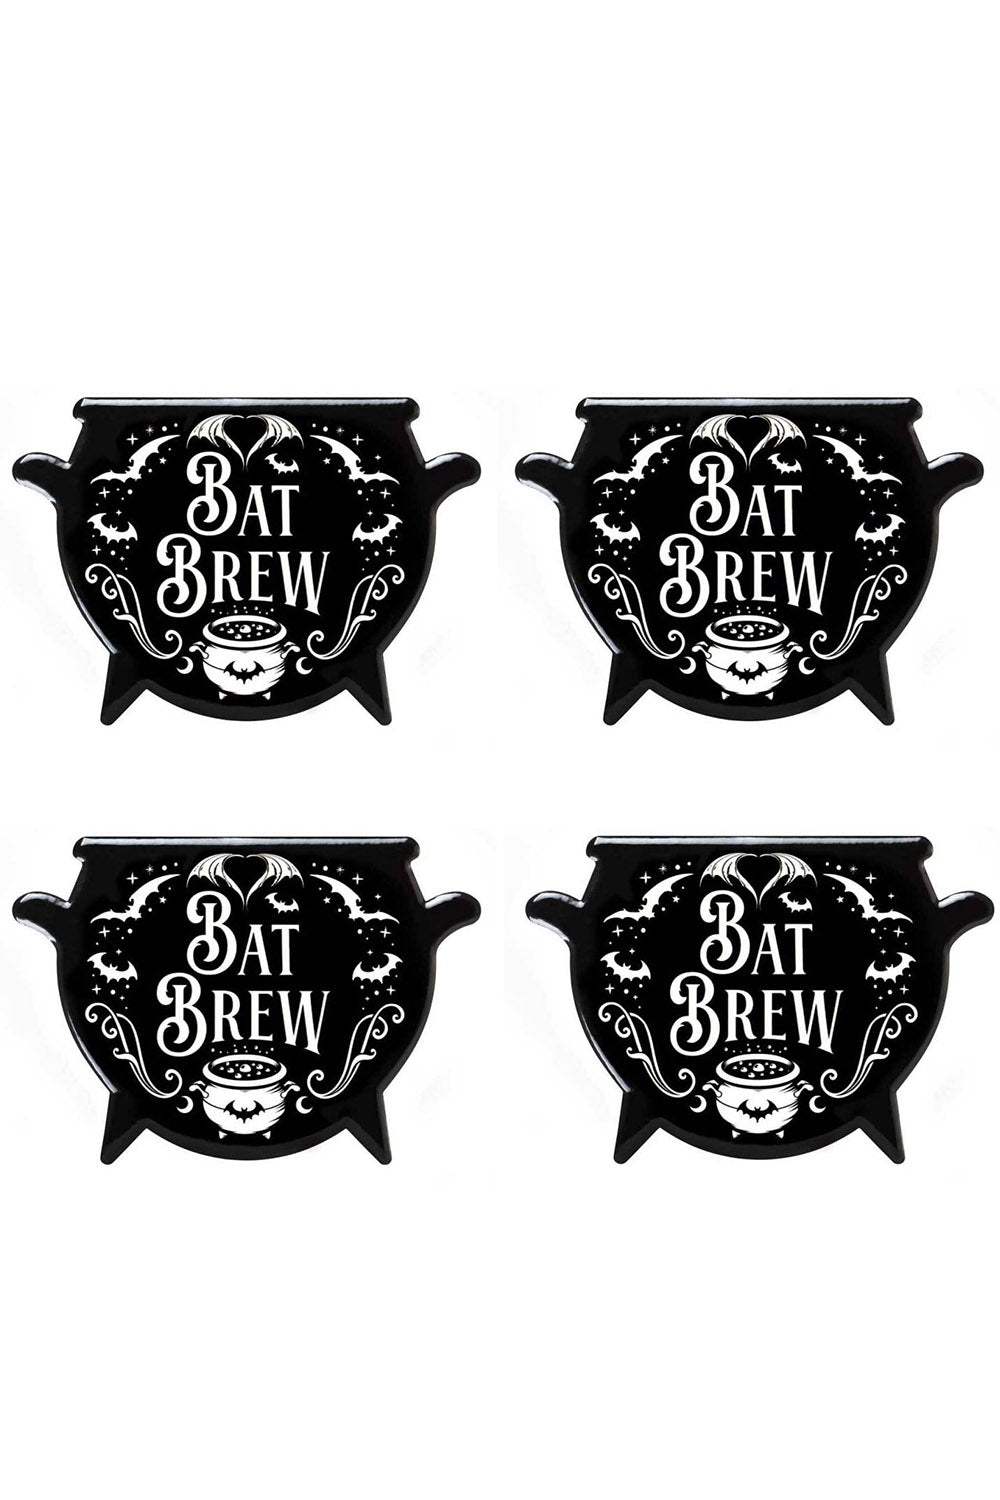 Bat Brew Cauldron Coaster Set